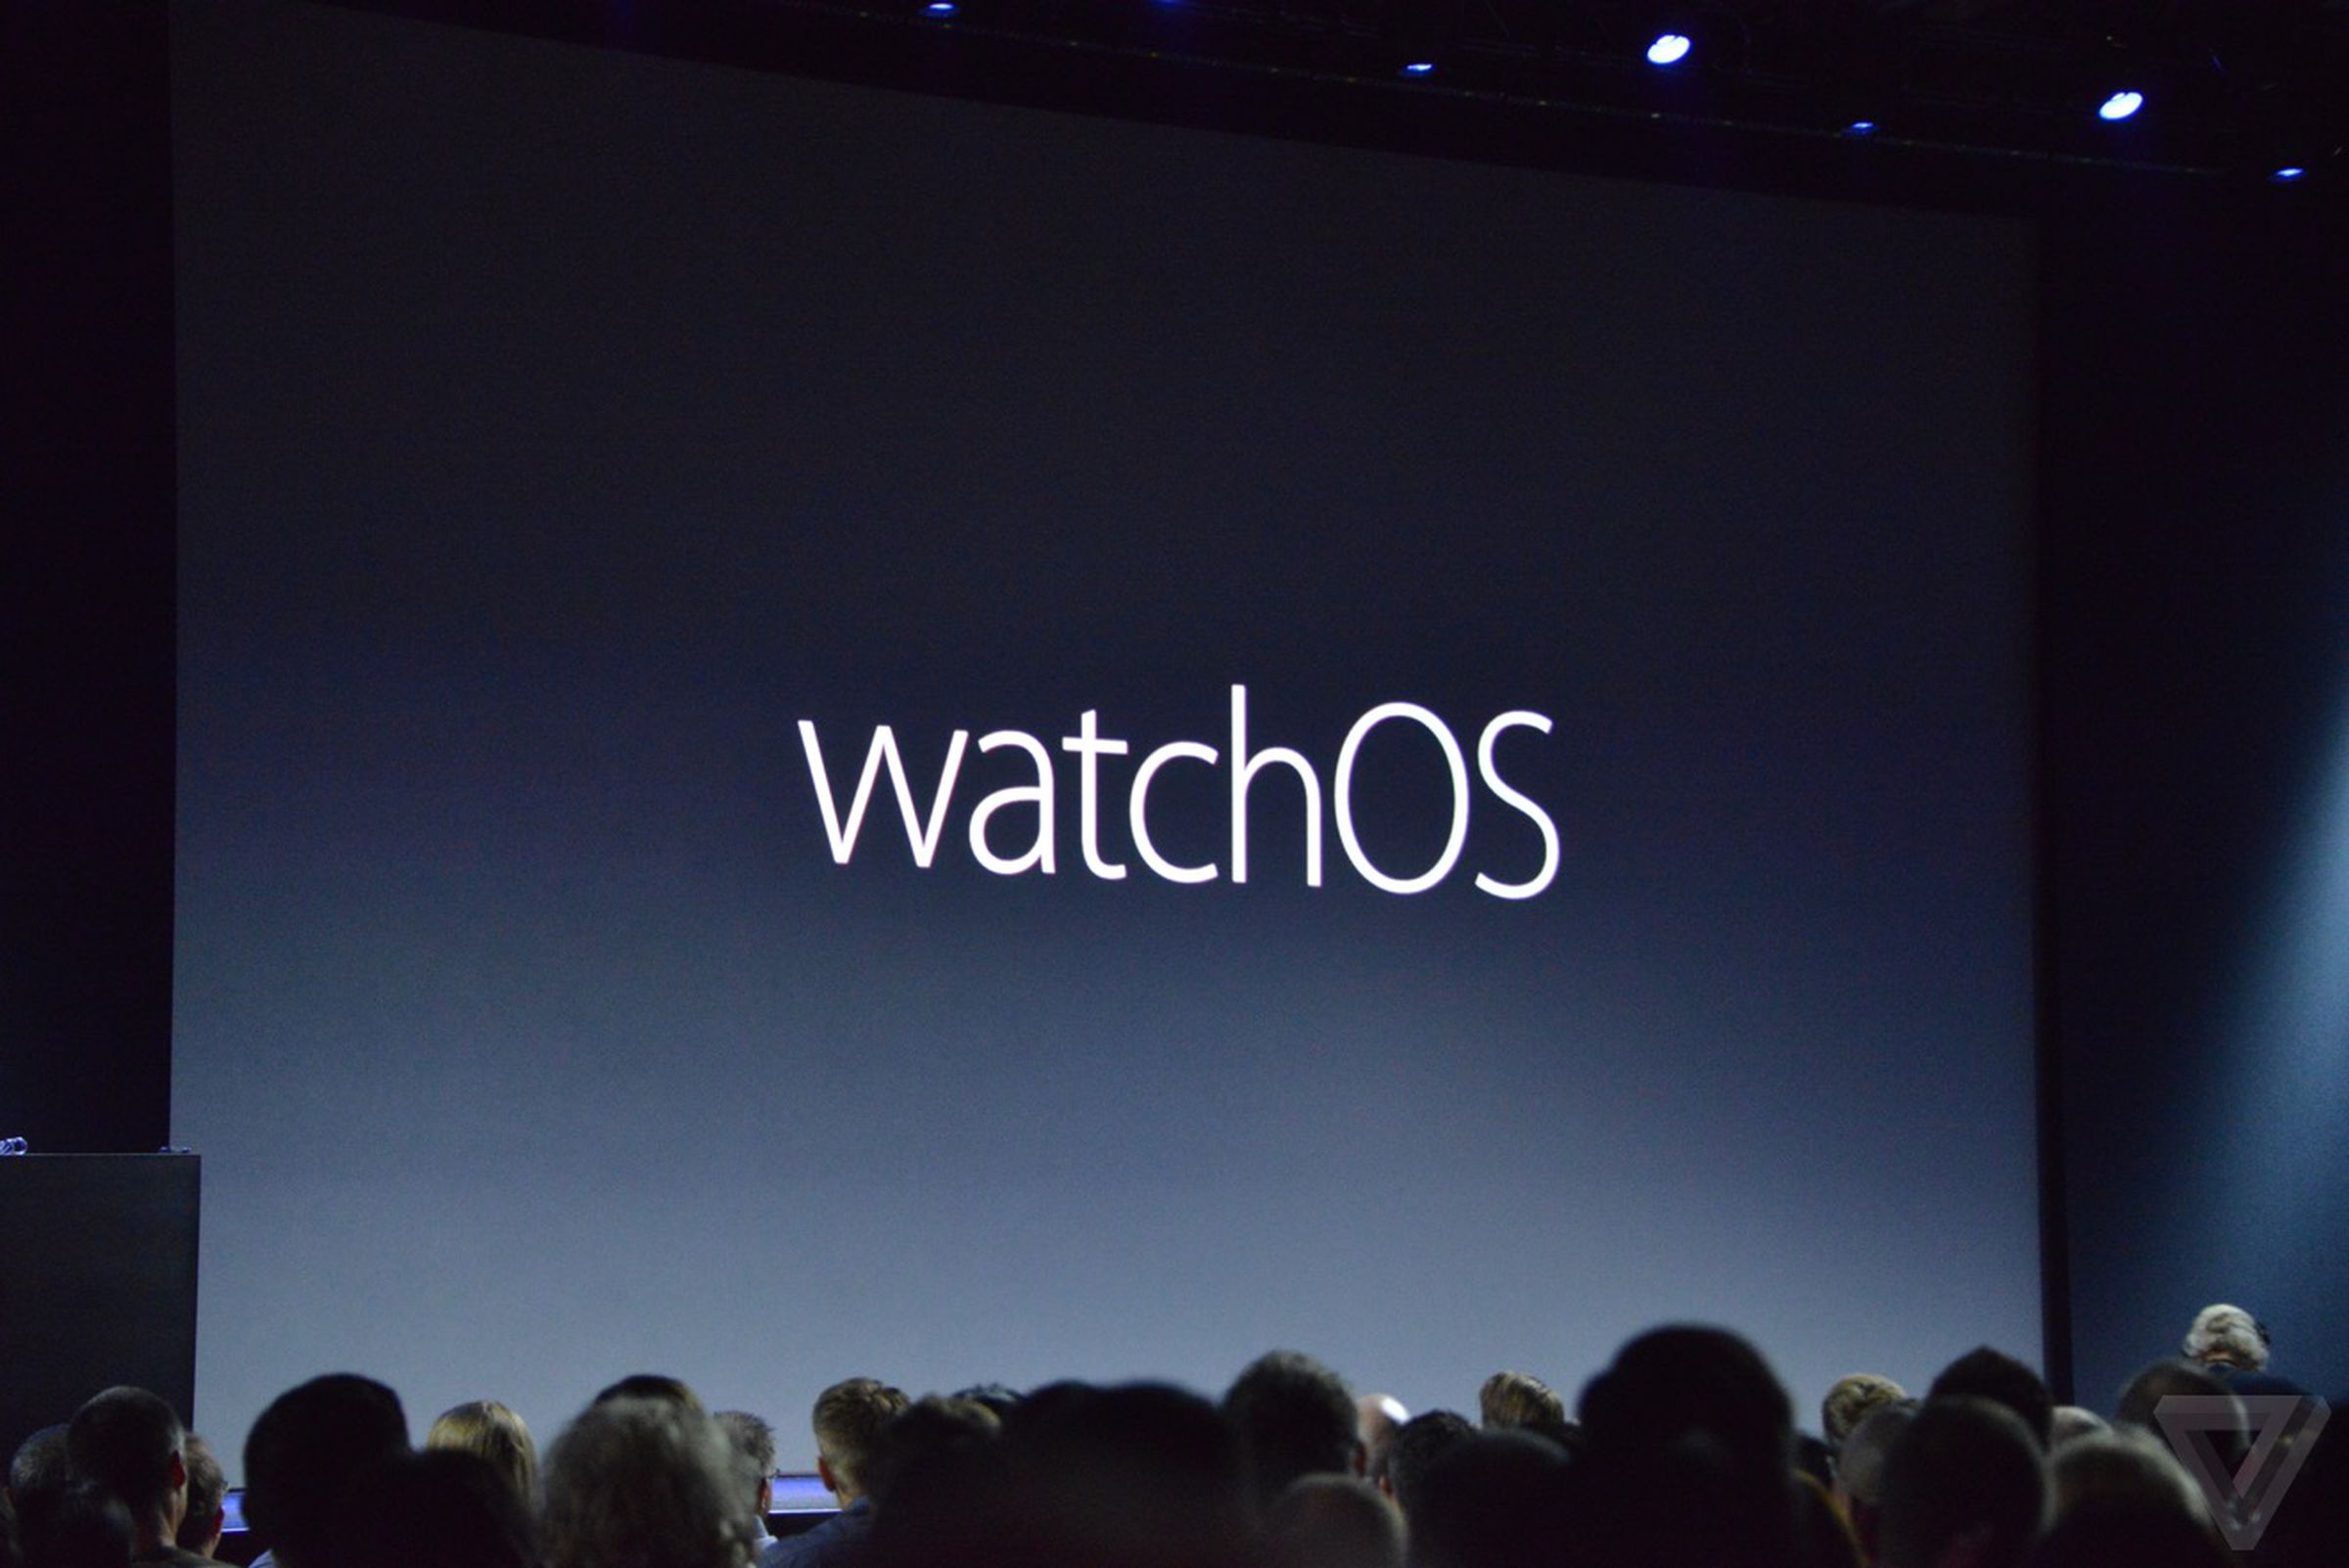 watchOS 2 at WWDC 2015 photos